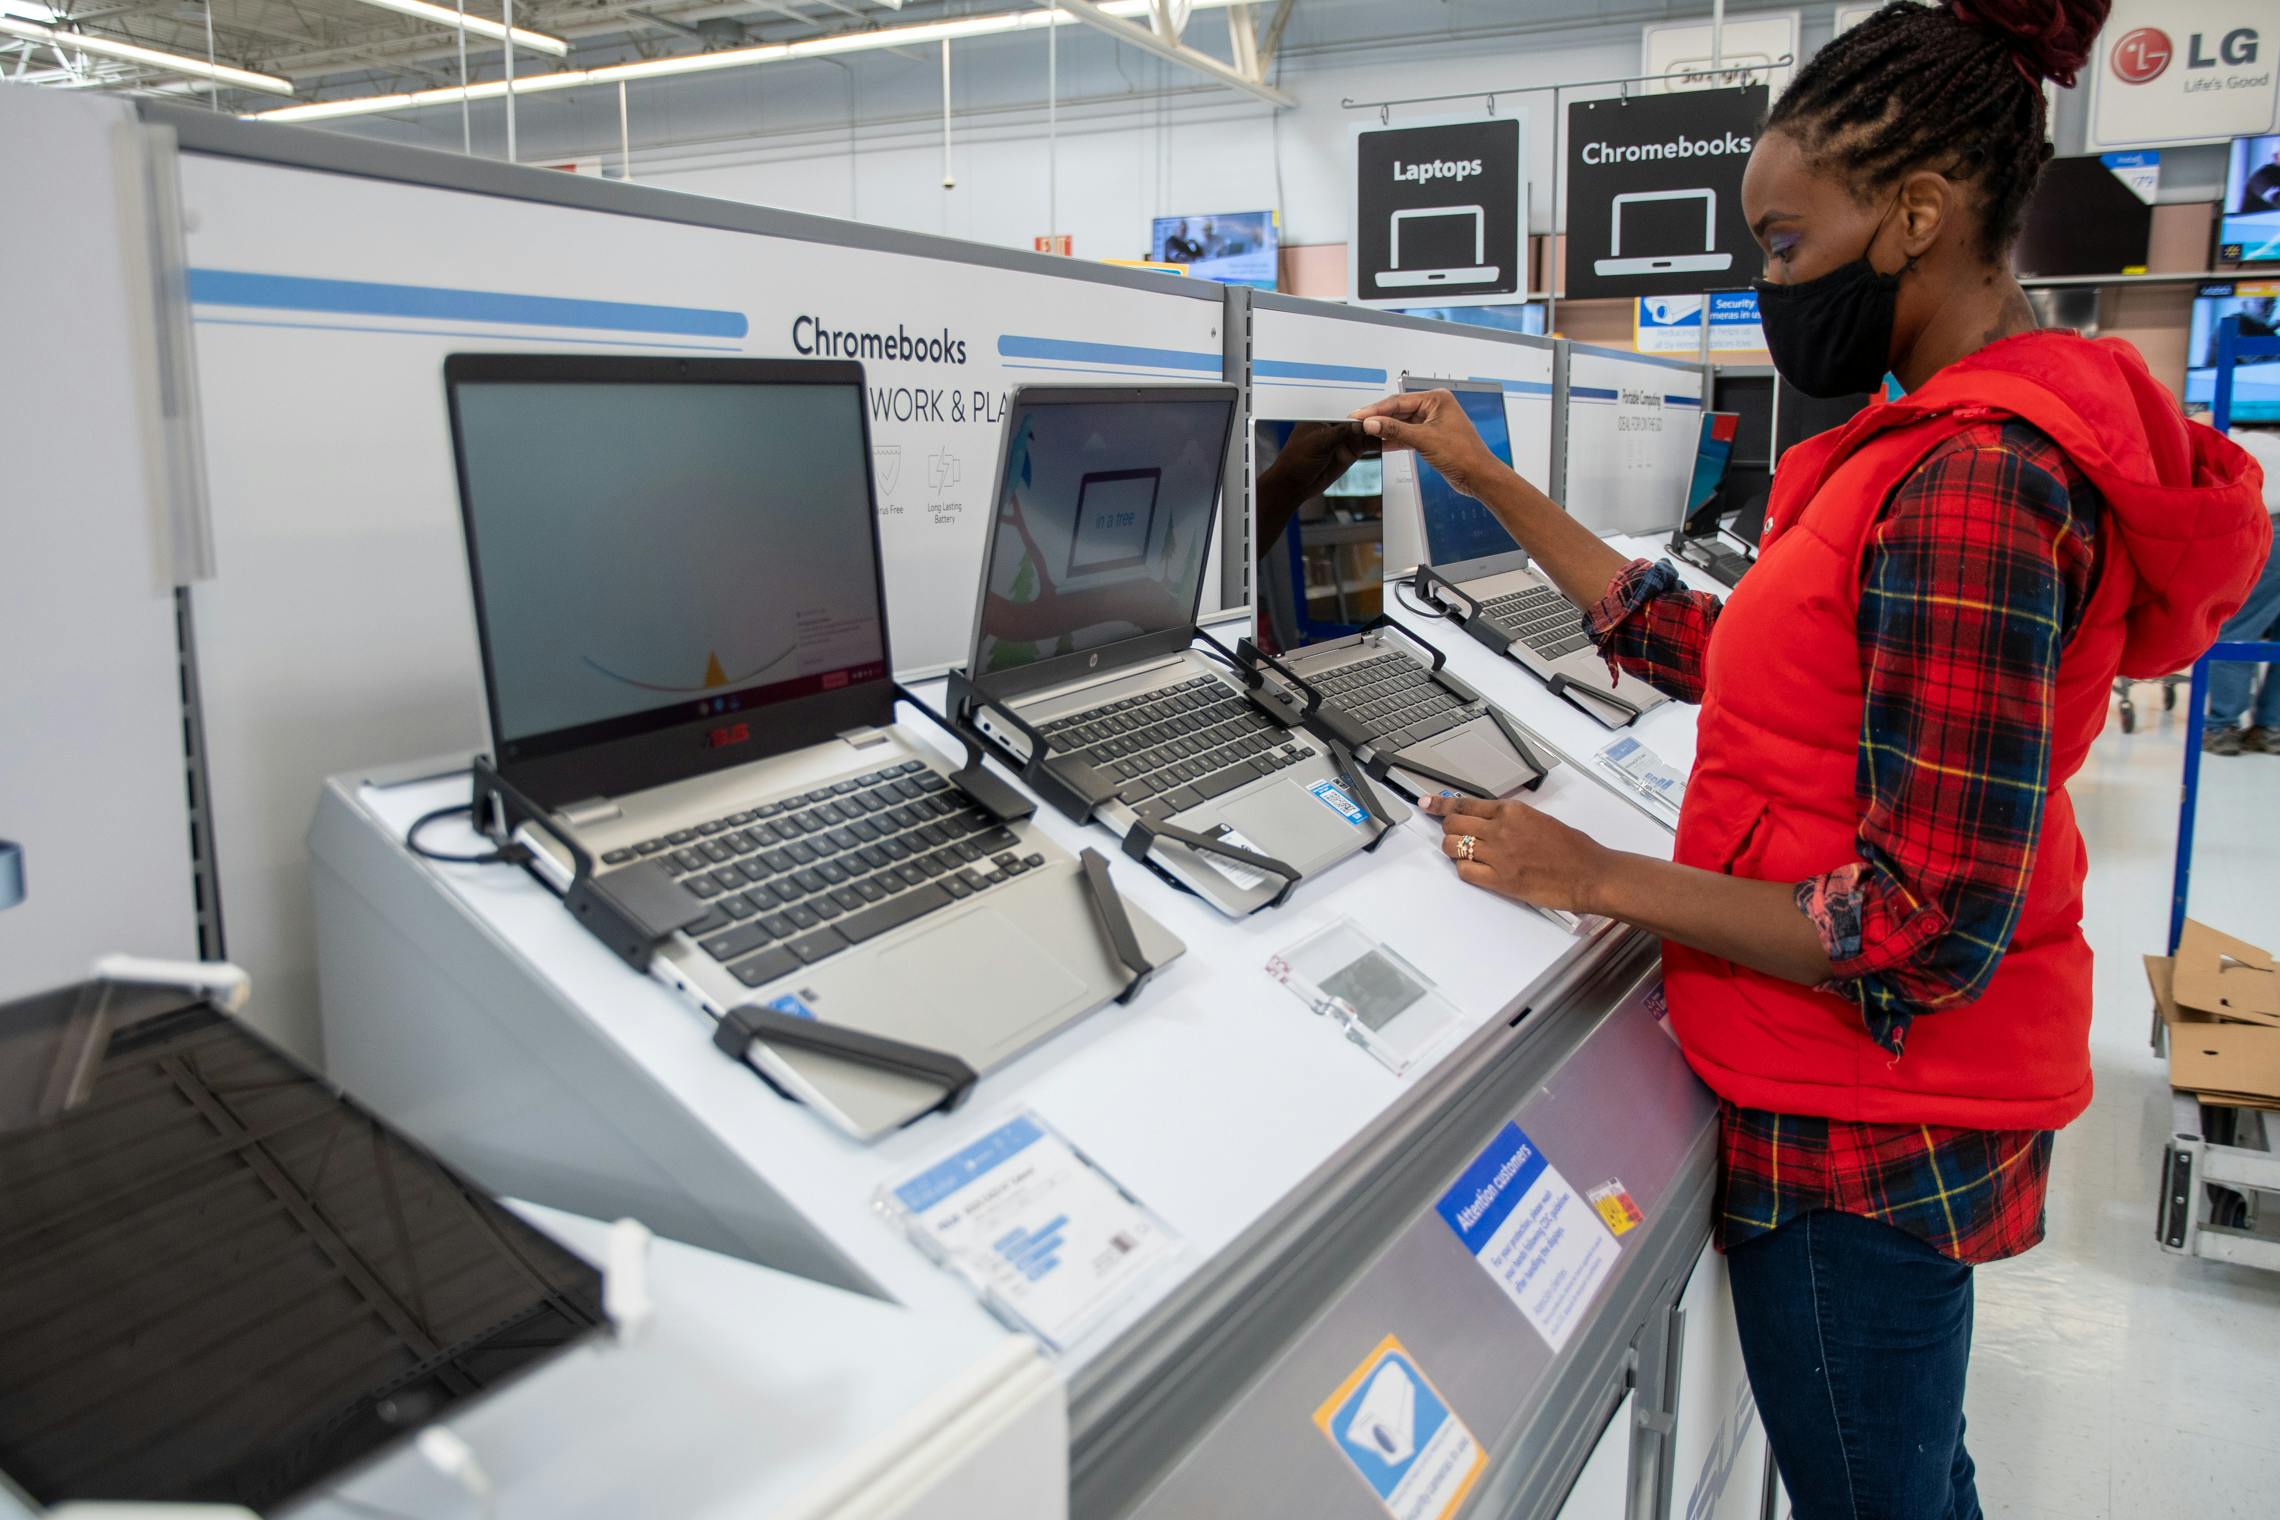 A woman looking at Chromebook laptop computers at Walmart.